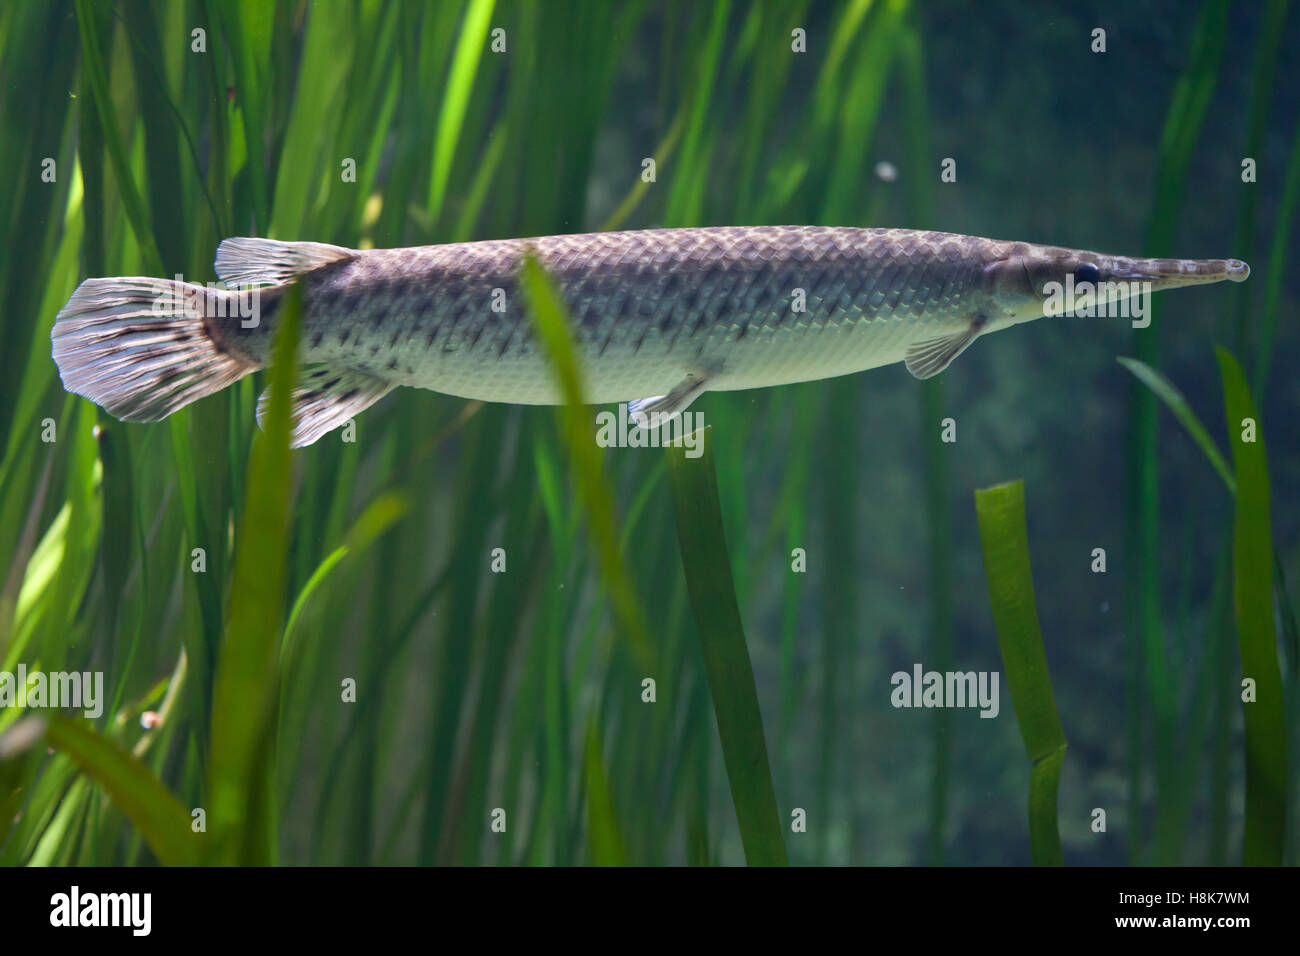 Spotted gar (Lepisosteus oculatus). Freshwater fish. Stock Photo